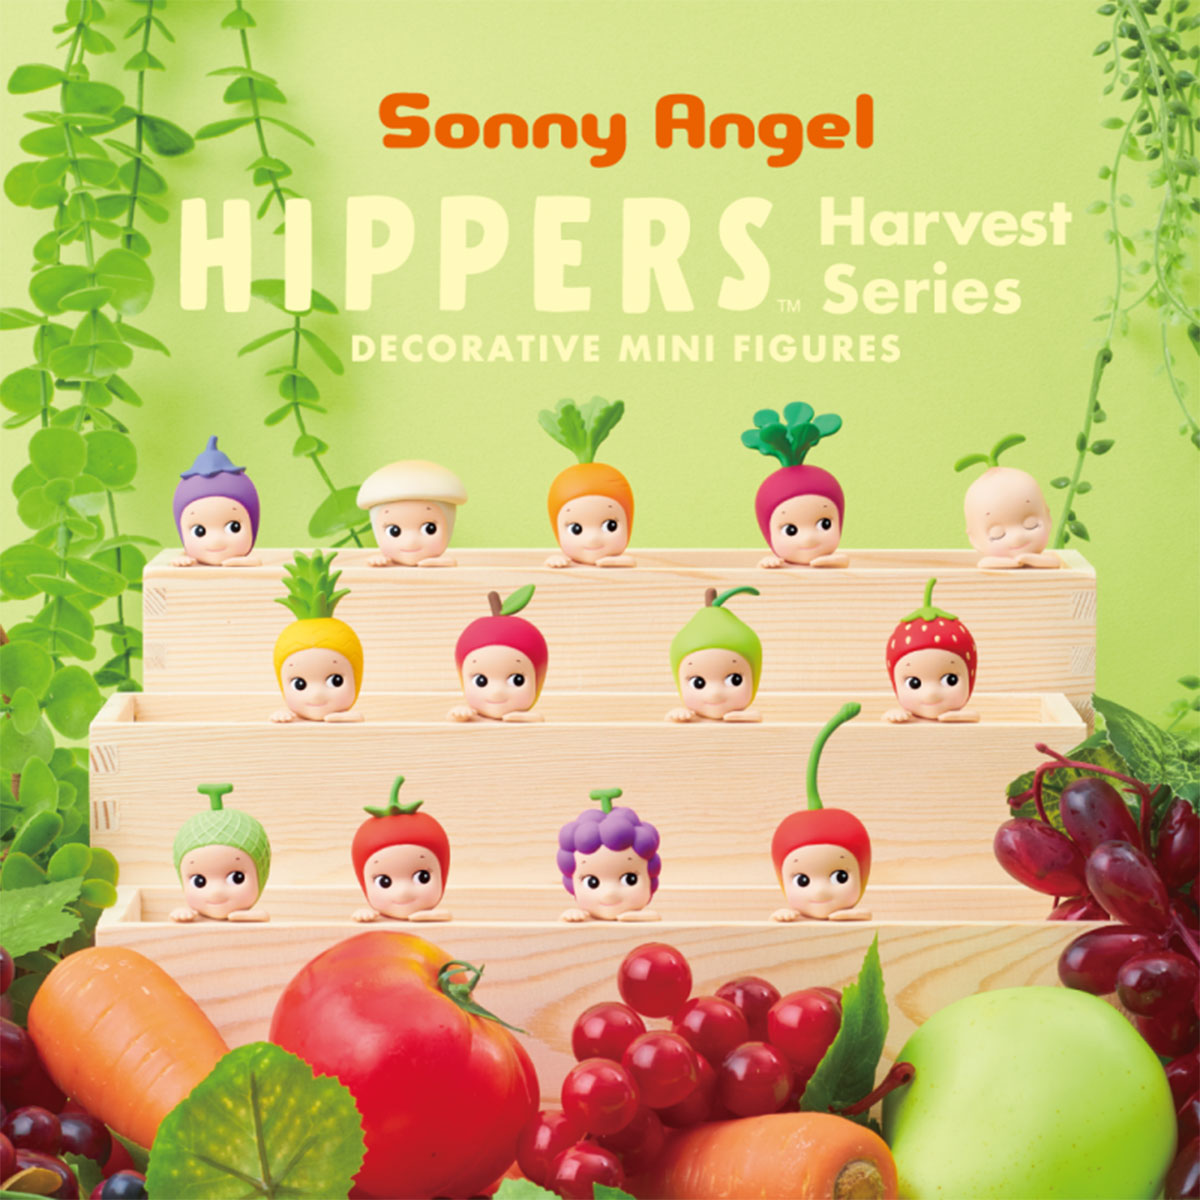 Hippers Harvest Series Sonny Angel Figure